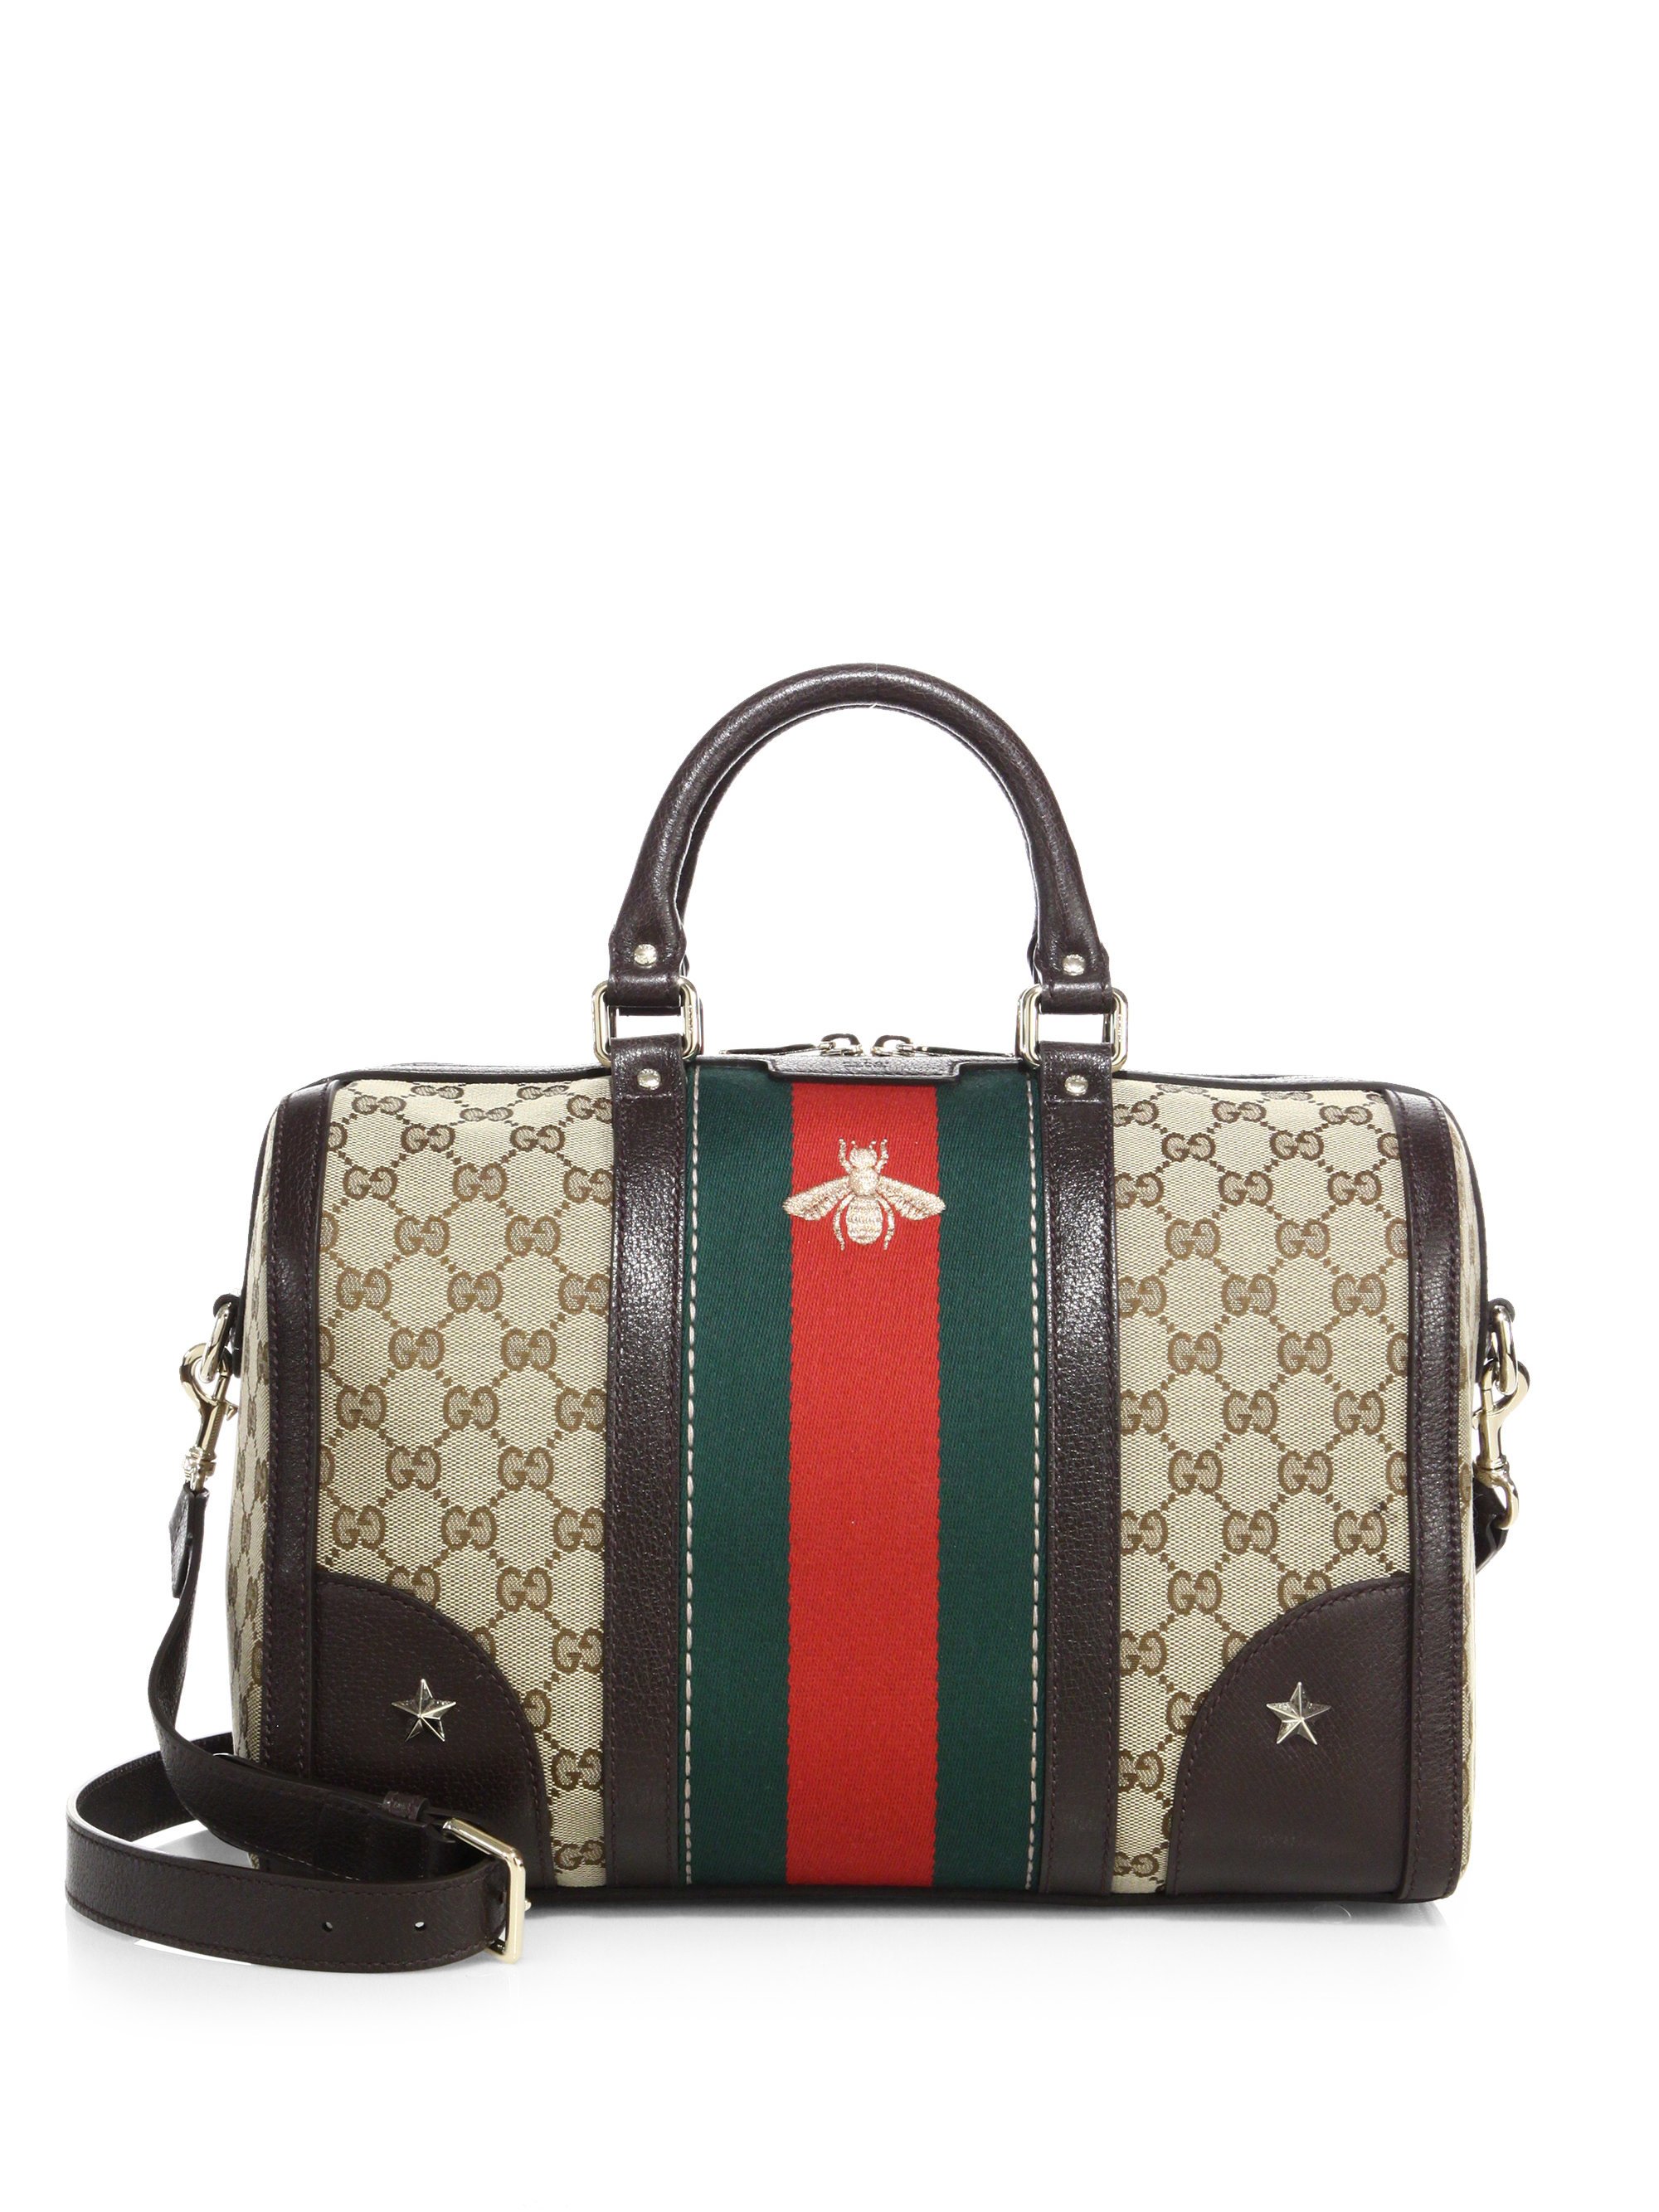 Roberta Di Camerino Handbags: Gucci Handbags At Saks